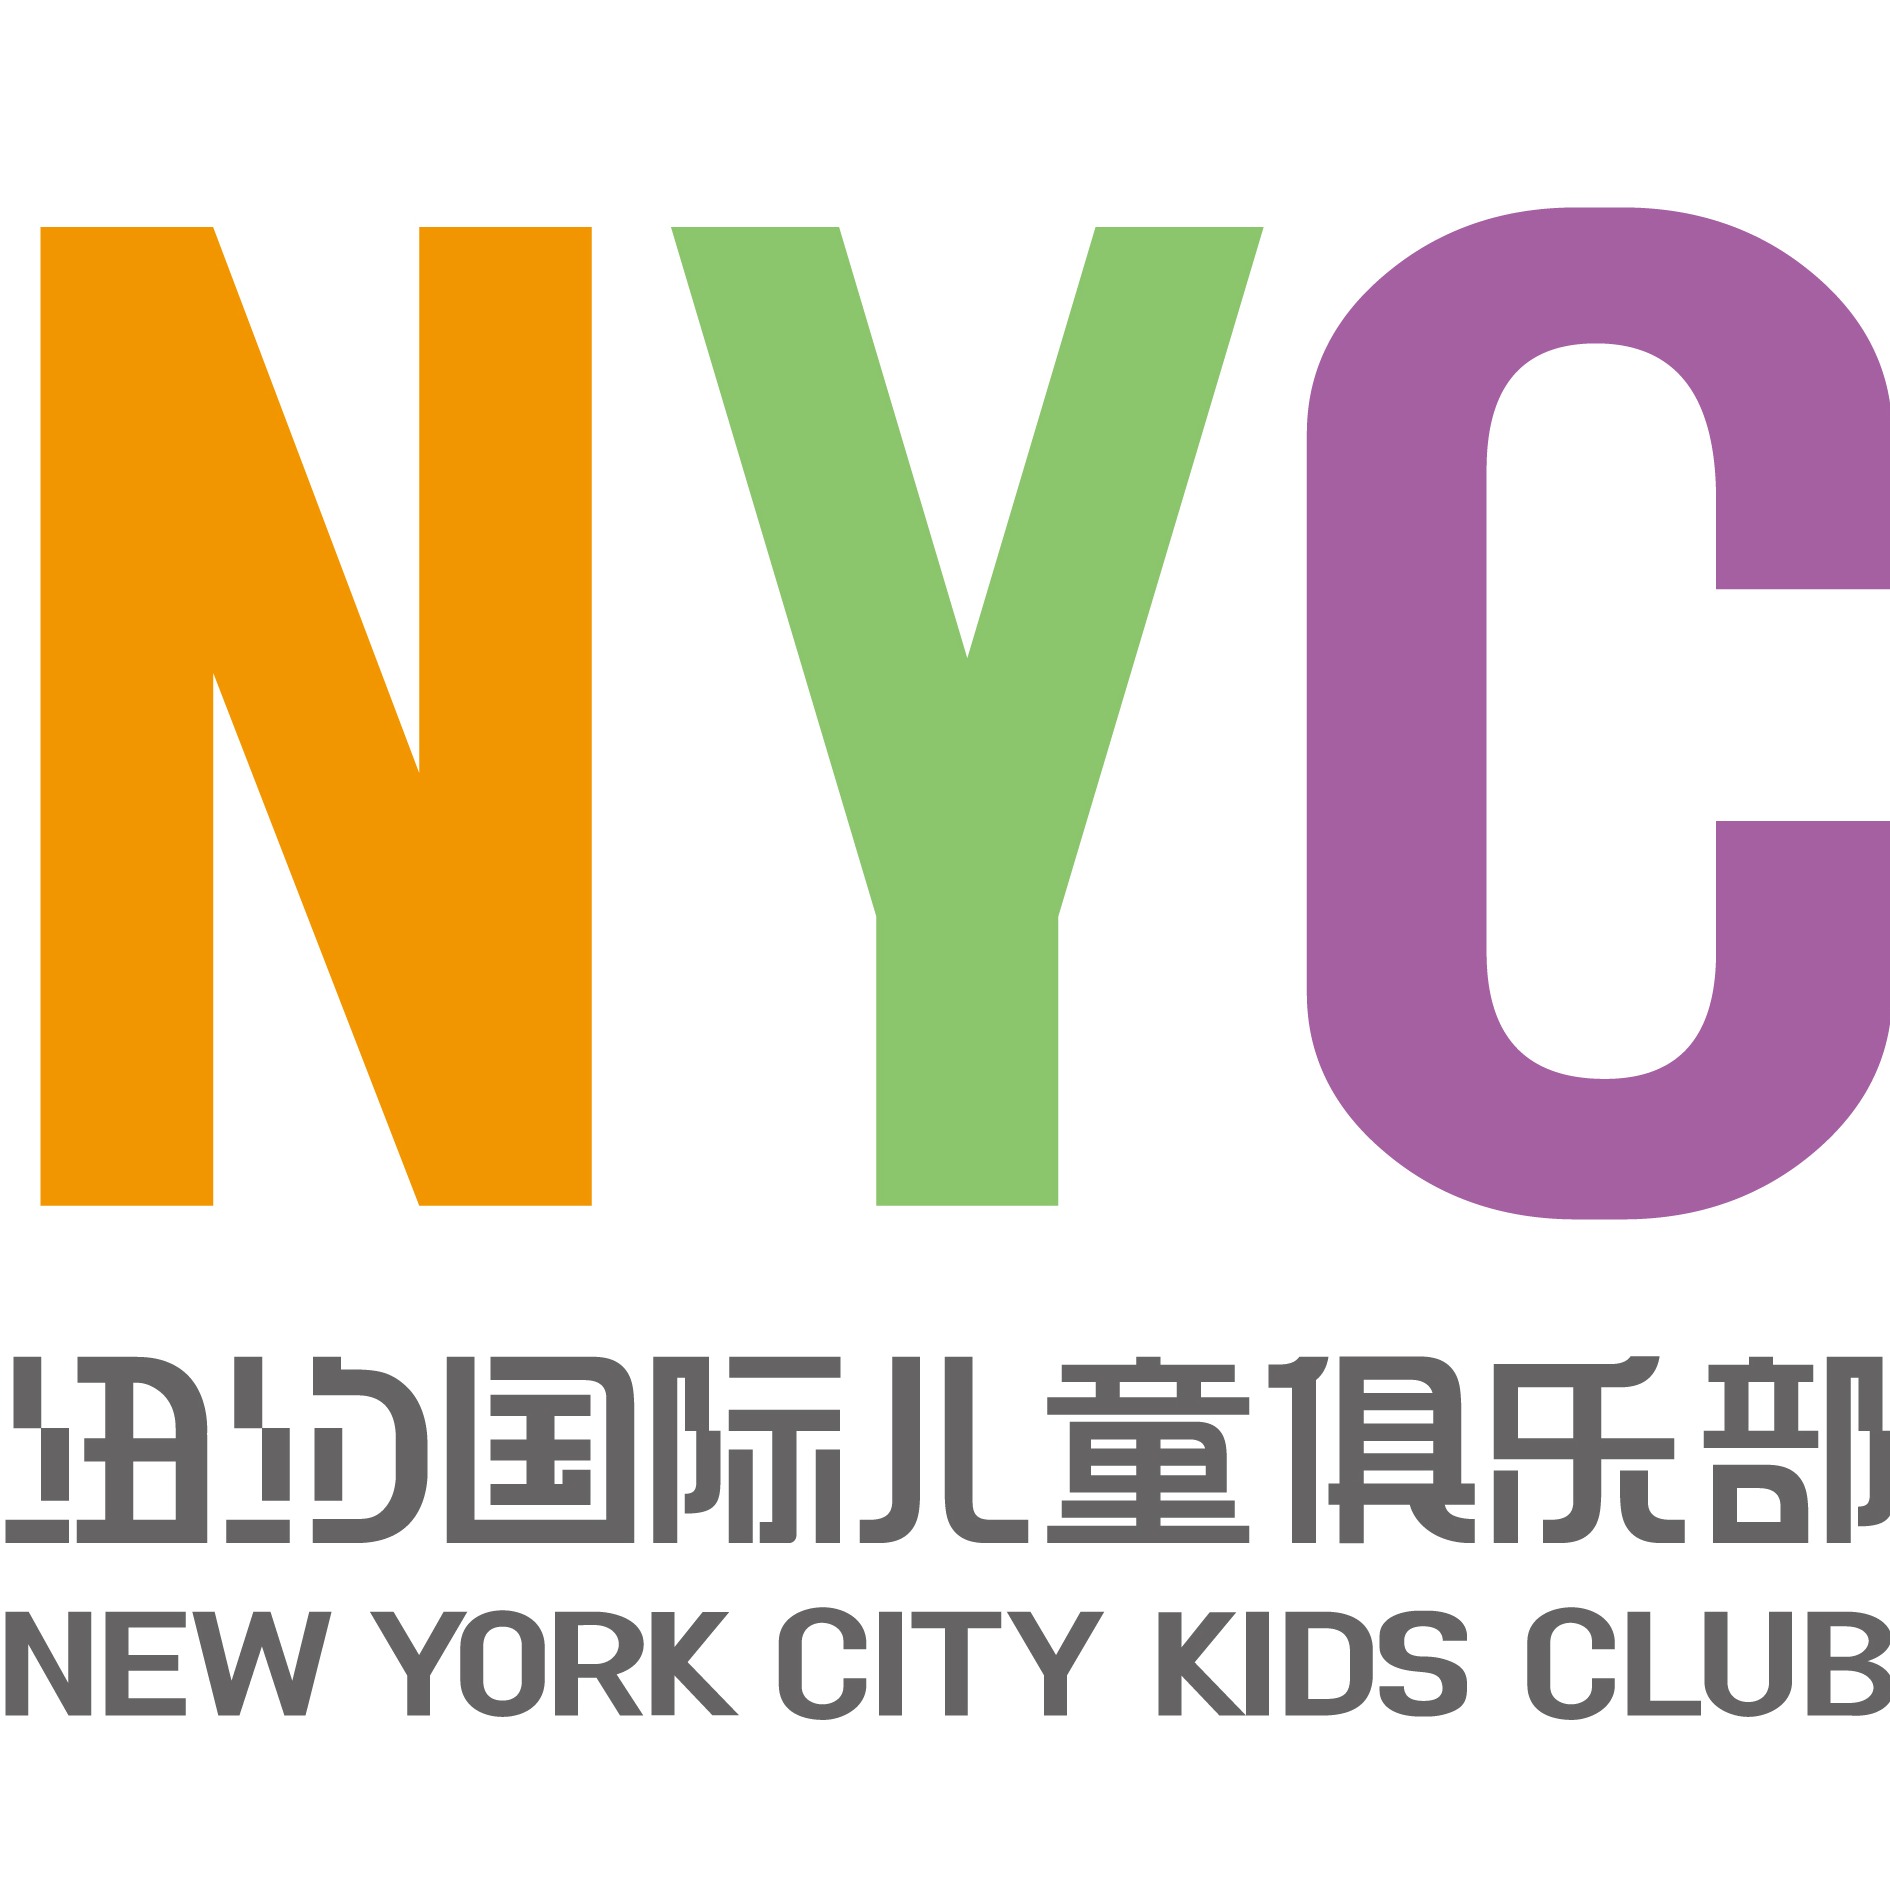 NYC纽约国际儿童俱乐部图片